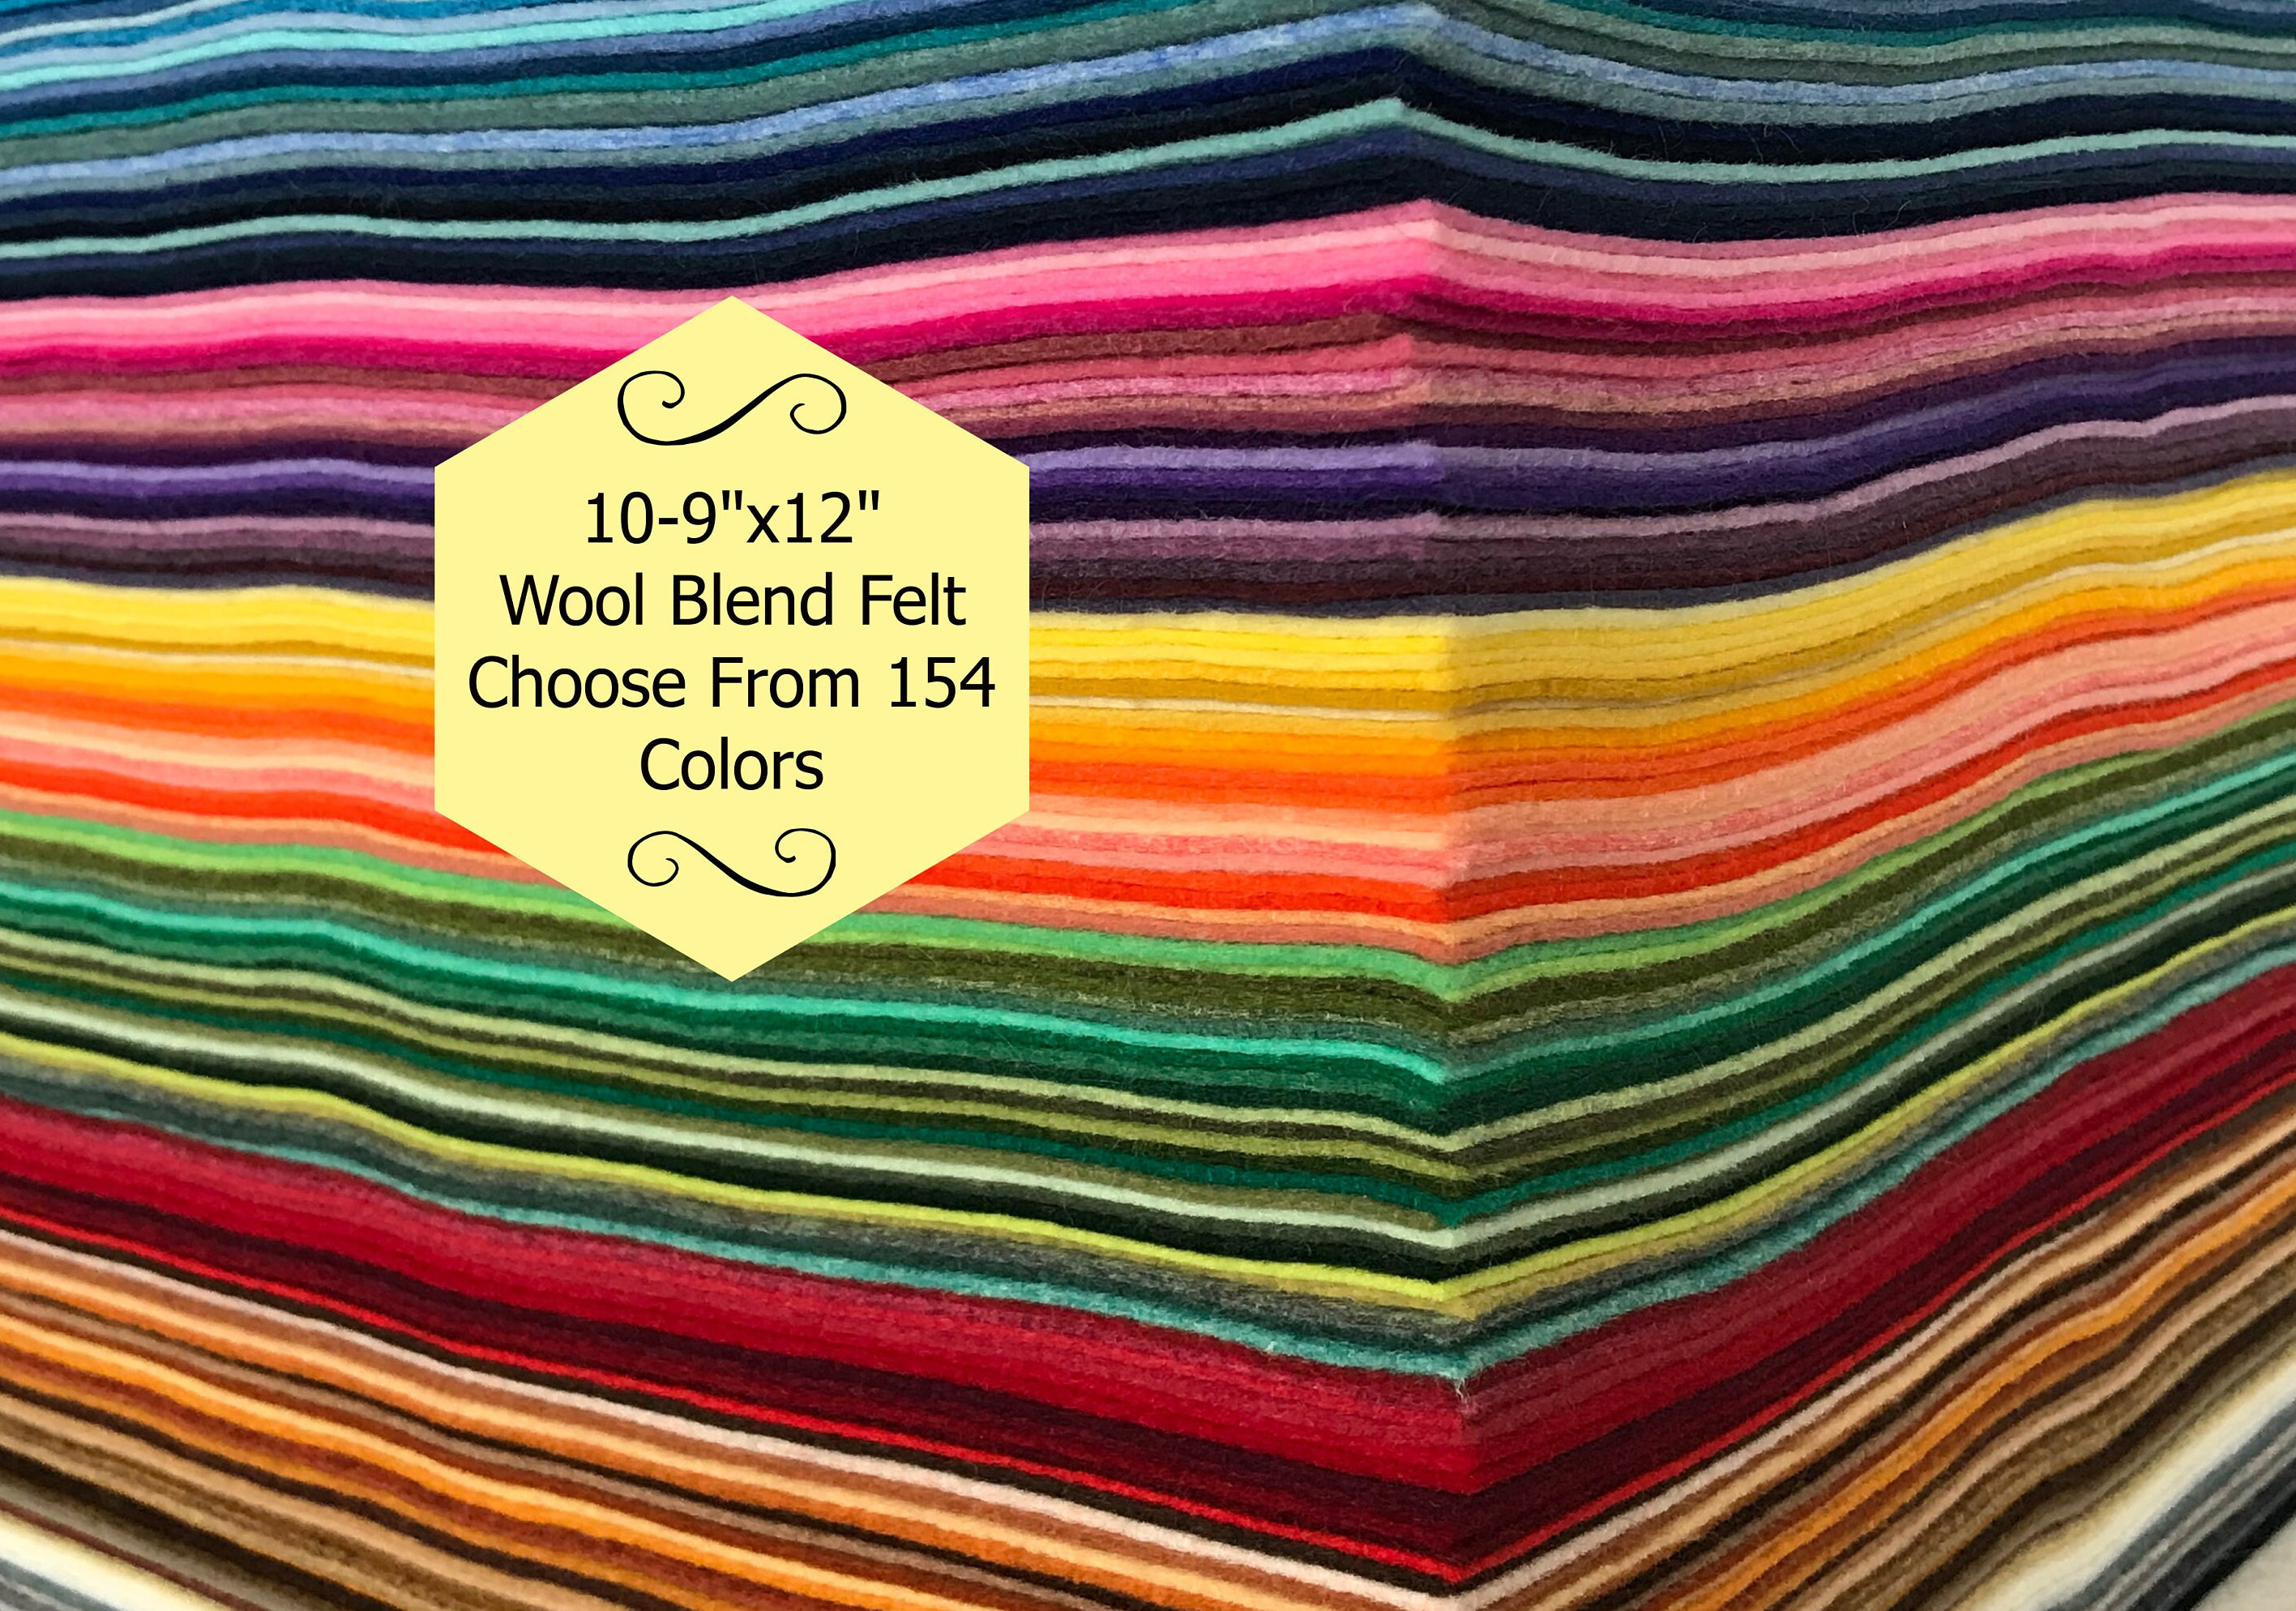 18 U PICK 6x6 Sheets Merino Wool Blend Felt 